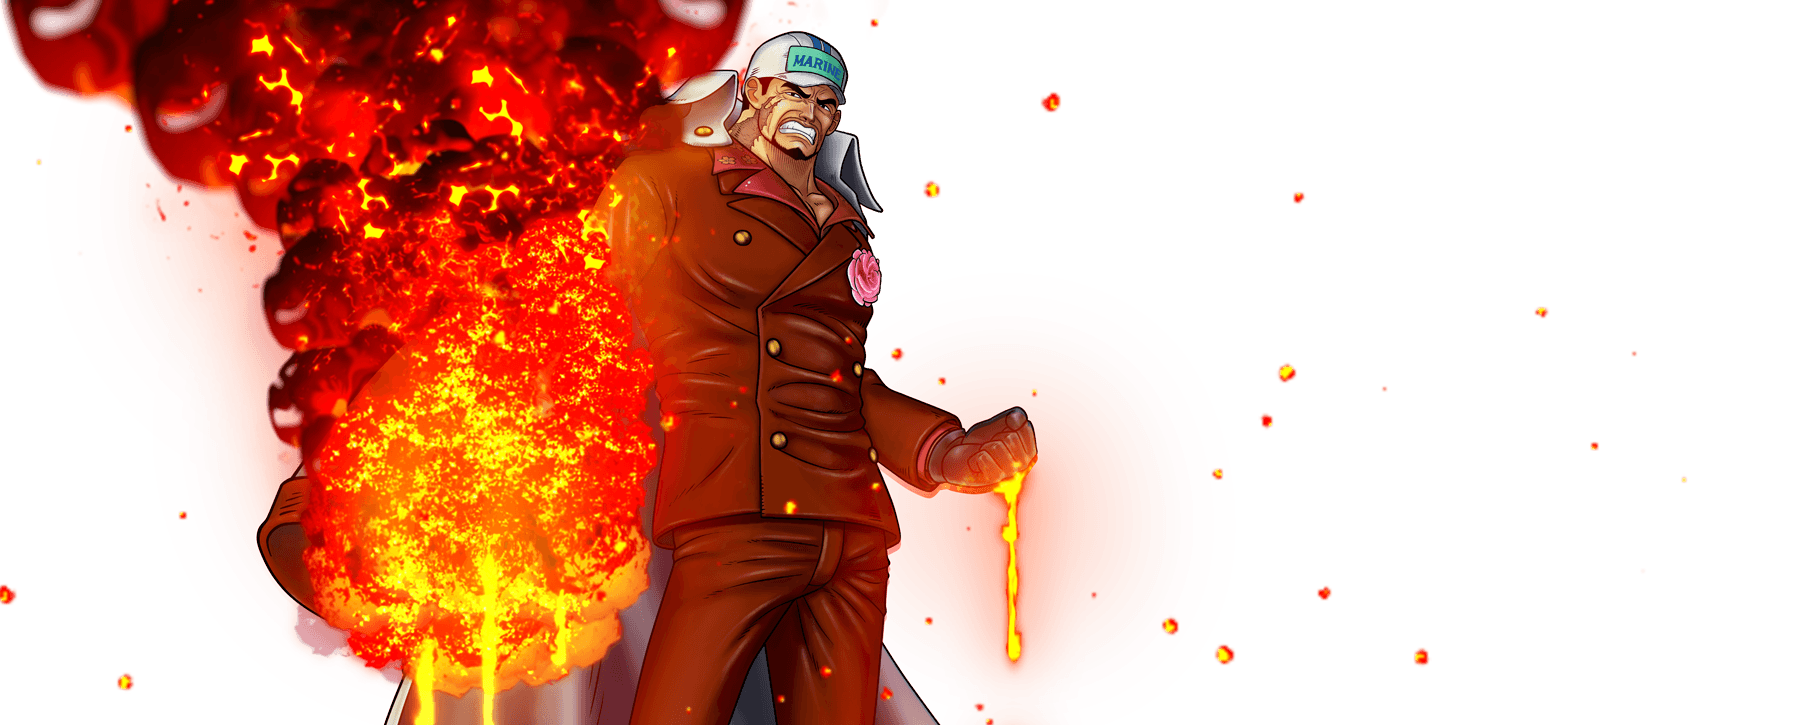 Akainu Portgas D. Ace Edward Newgate One Piece: Burning Blood